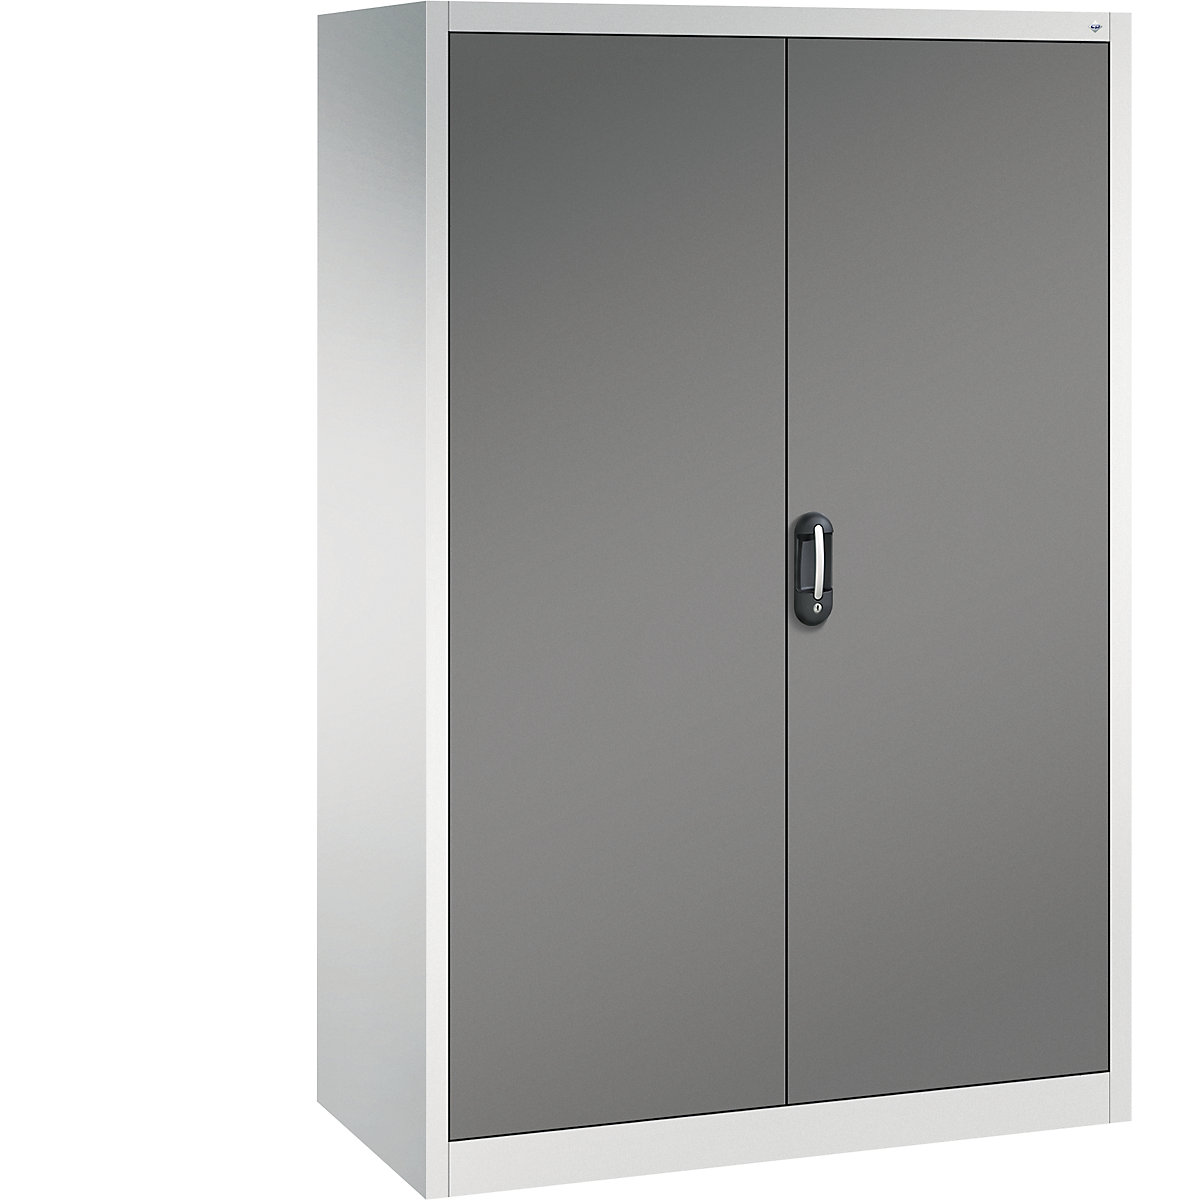 ACURADO universal cupboard – C+P, WxD 1200 x 600 mm, light grey / volcanic grey-20